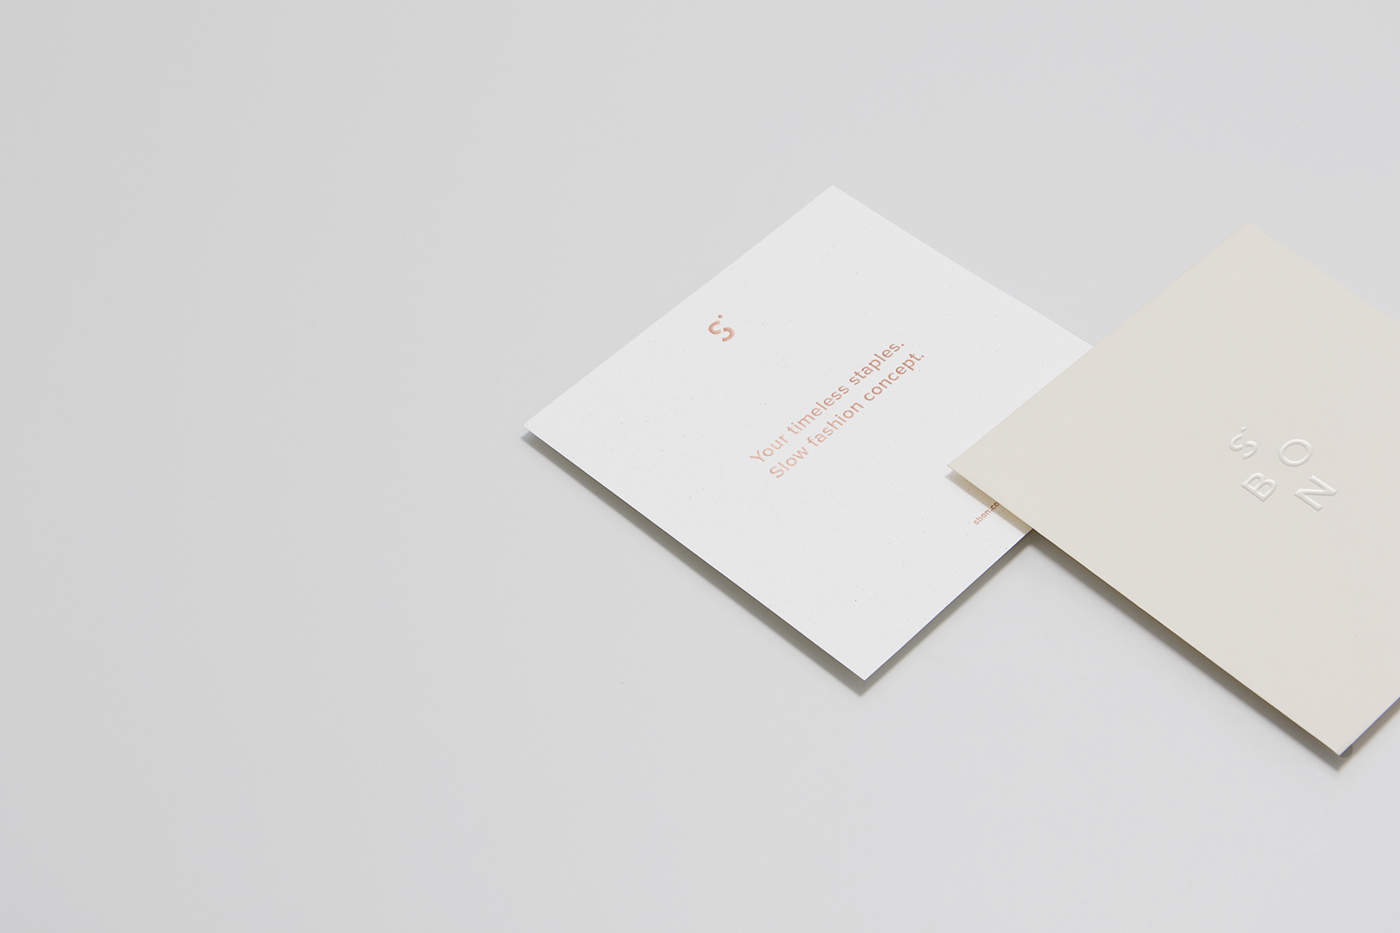 sbon brand logo Packaging stationary business card minimal design Fashion  Web Design 